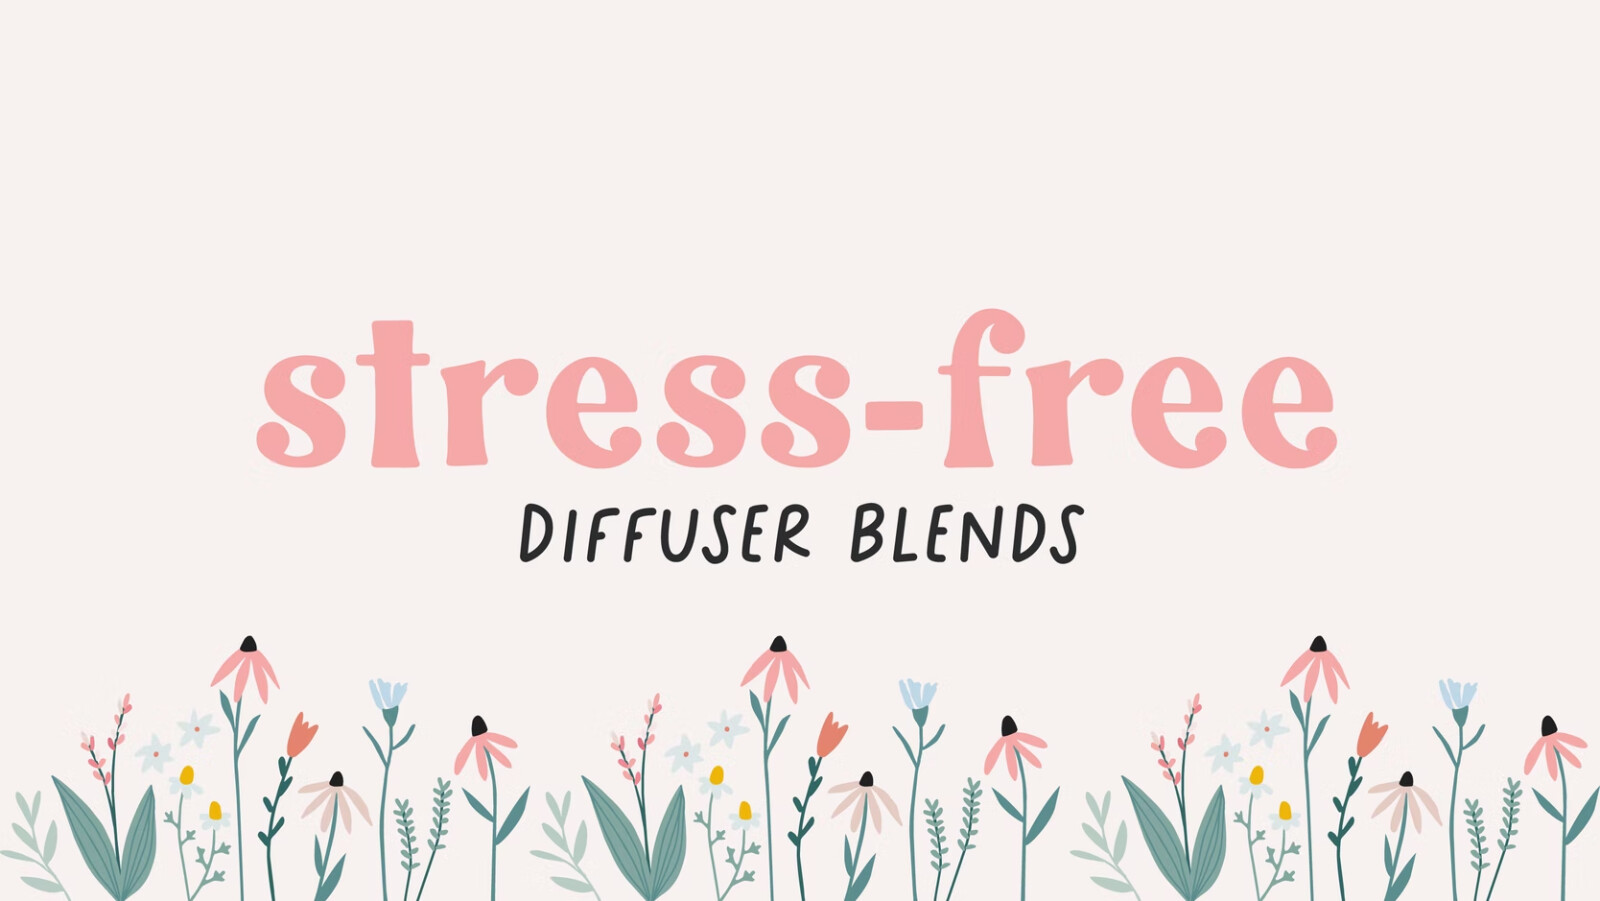 Stress - Free Diffuser Blends